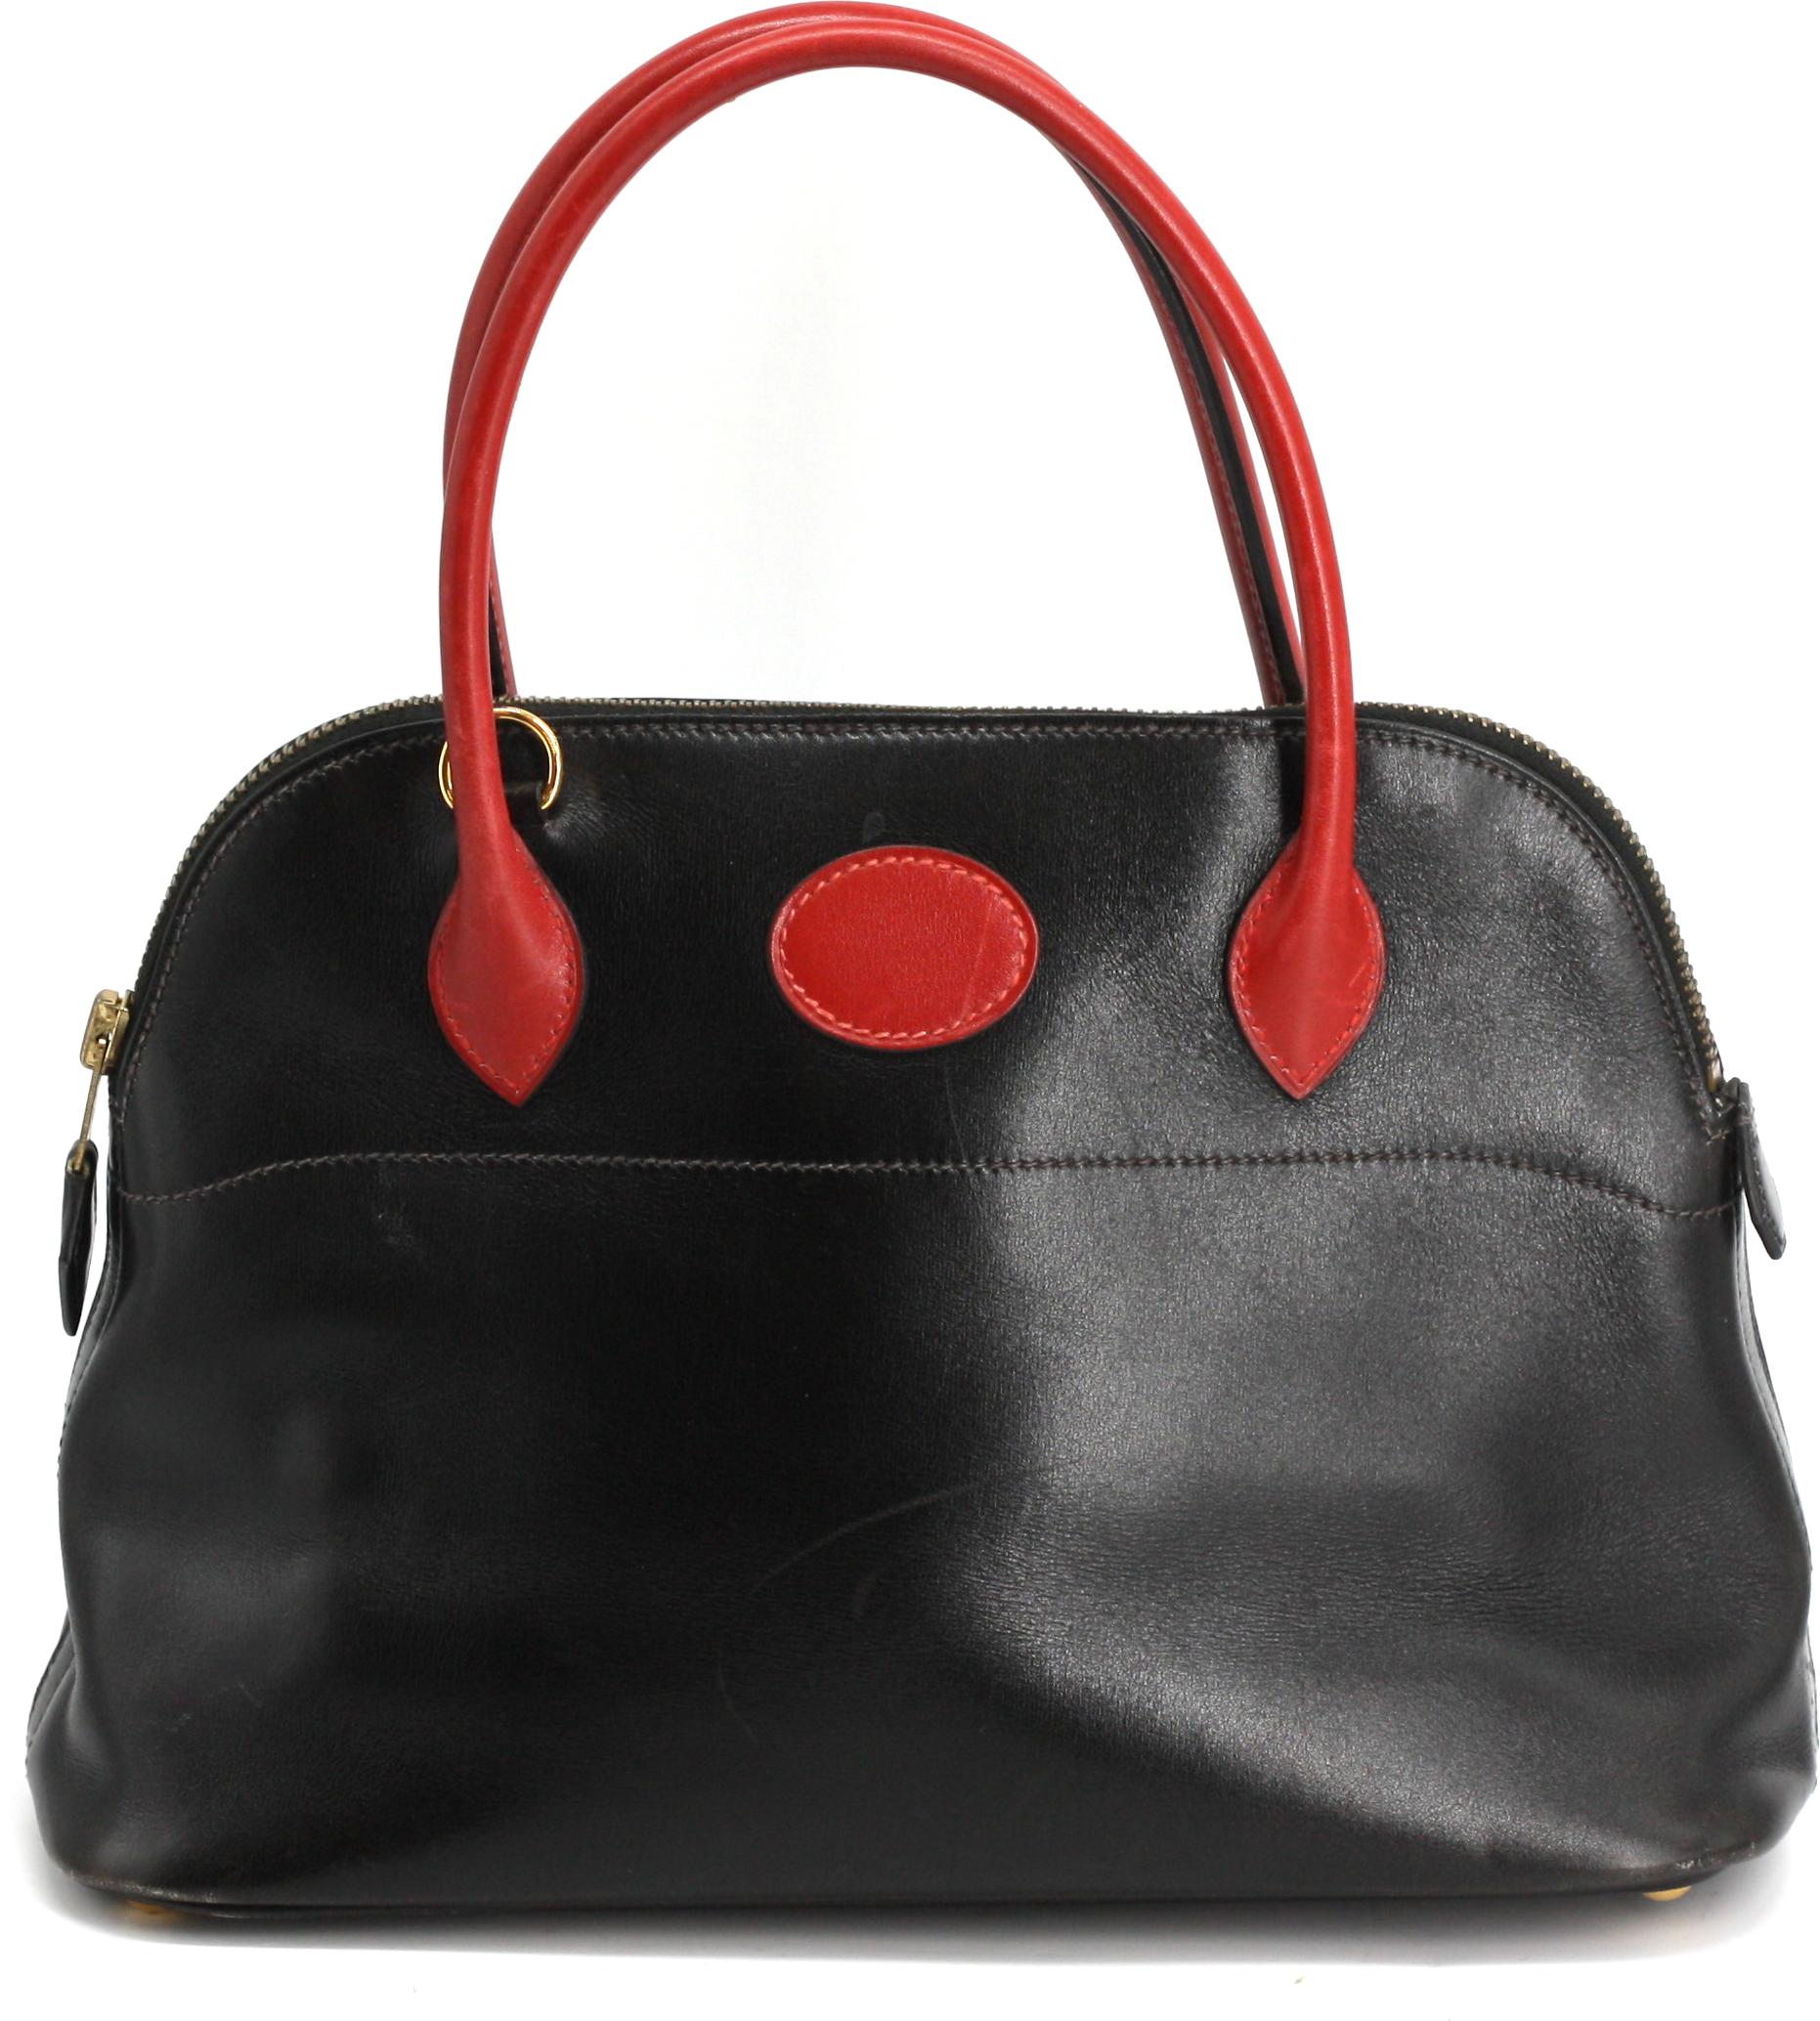 Hermes Box Calf Black and Red Leather Bolide Handbag For Sale 3